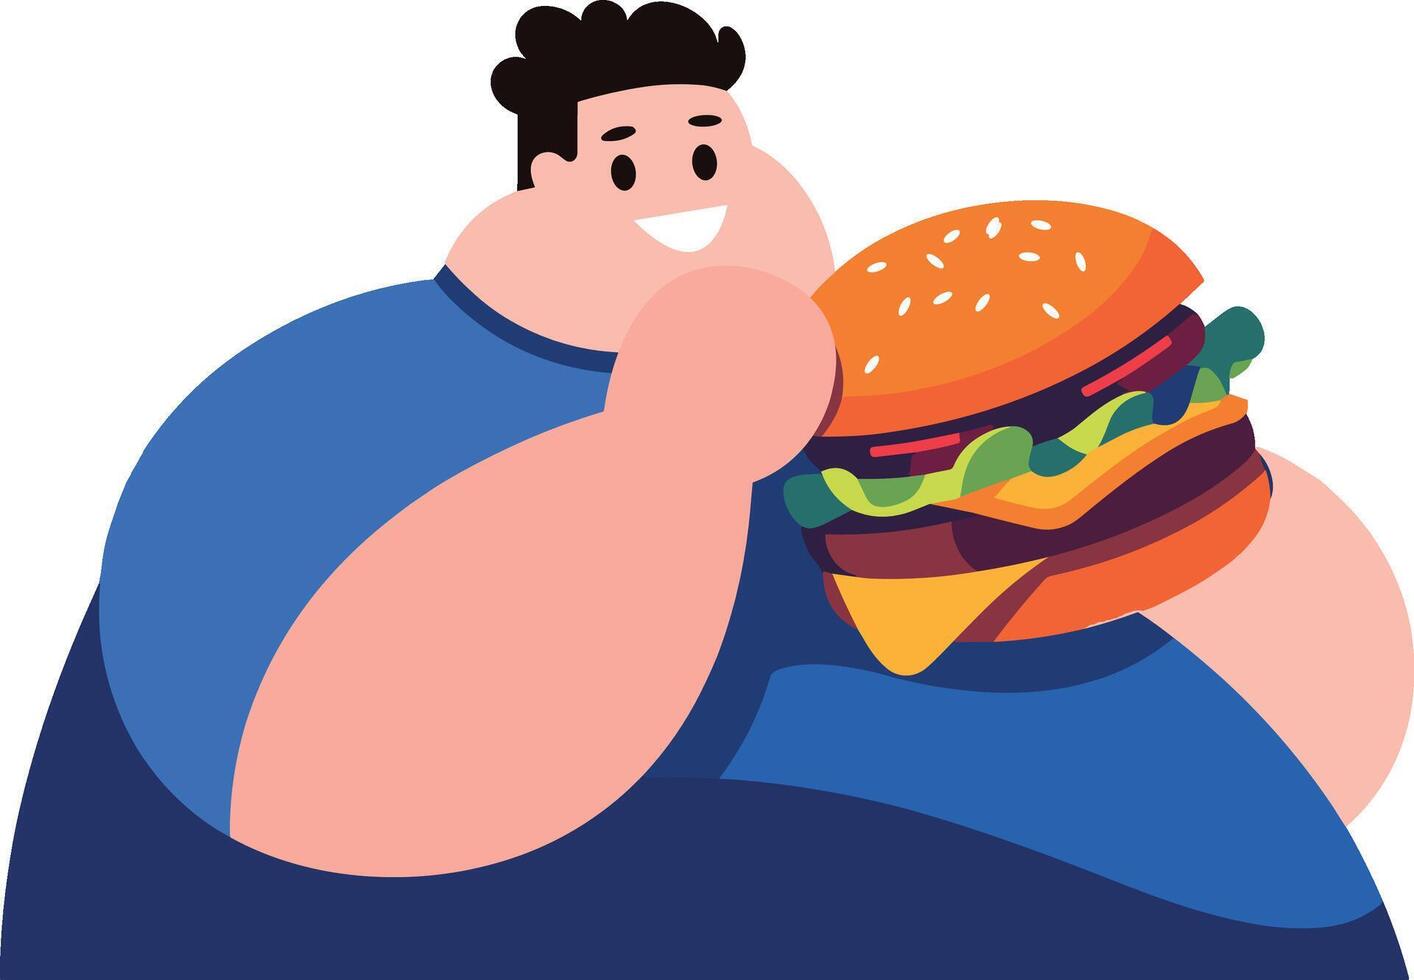 fett kille äter burger platt stil isolerat på bakgrund vektor